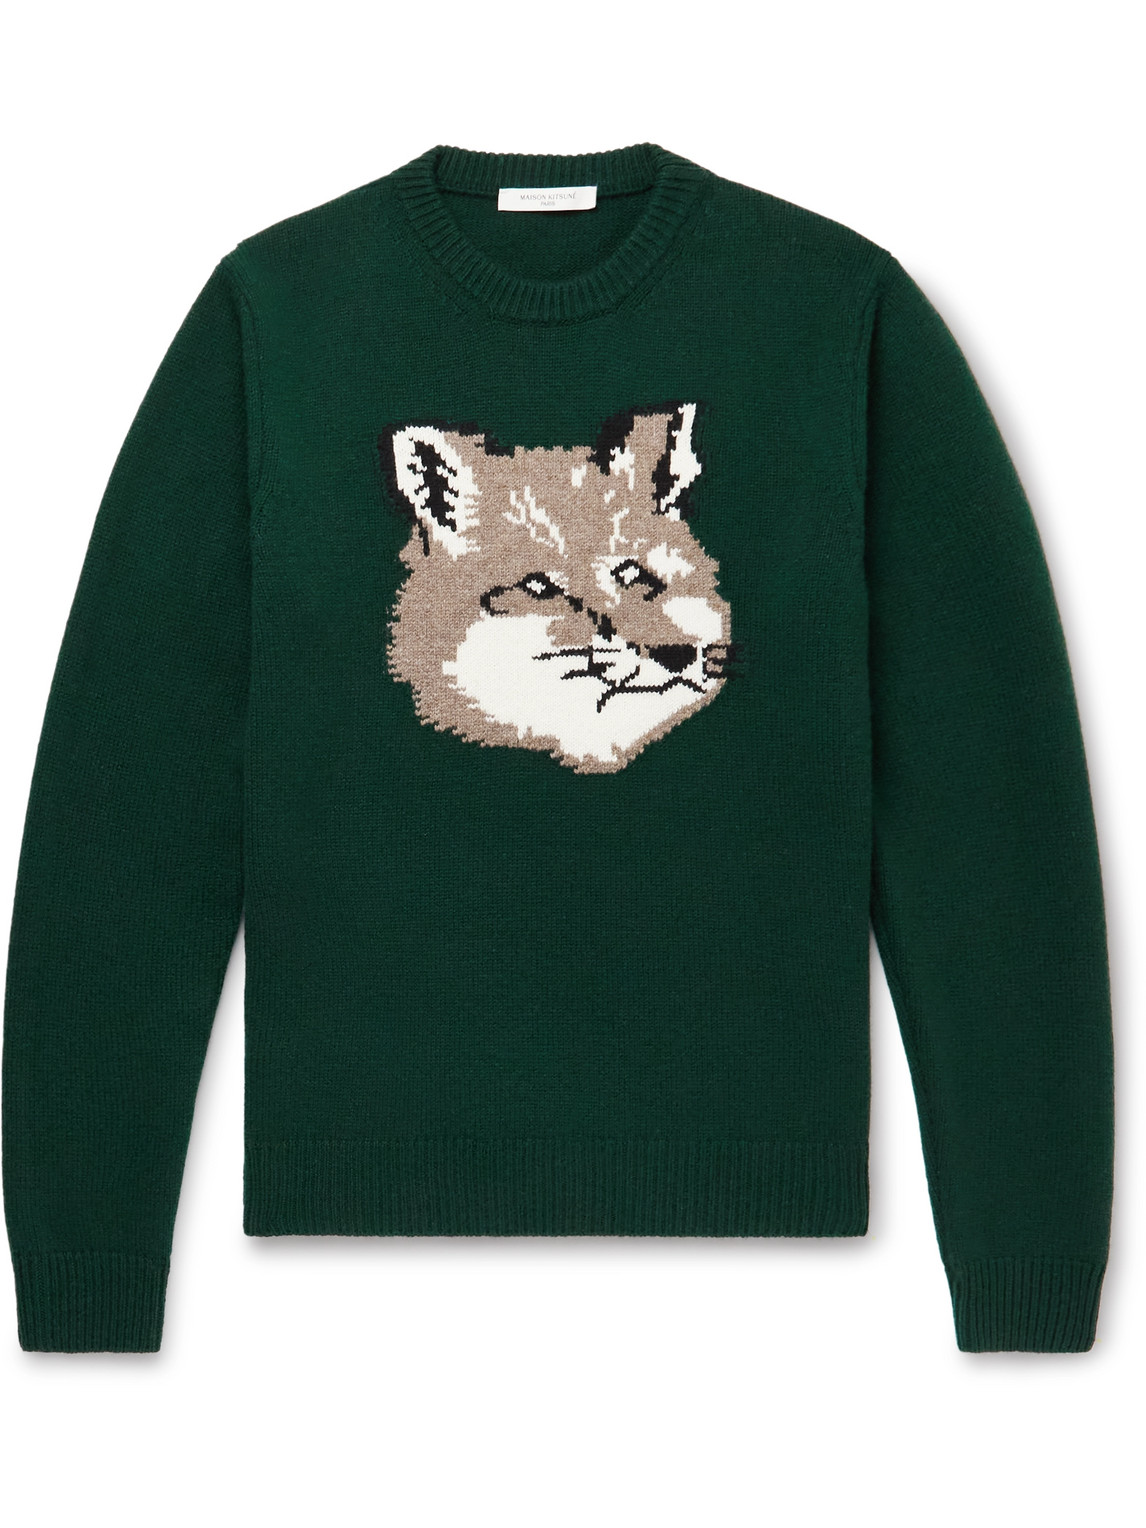 Maison Kitsuné - Intarsia Wool Sweater - Men - Green - L